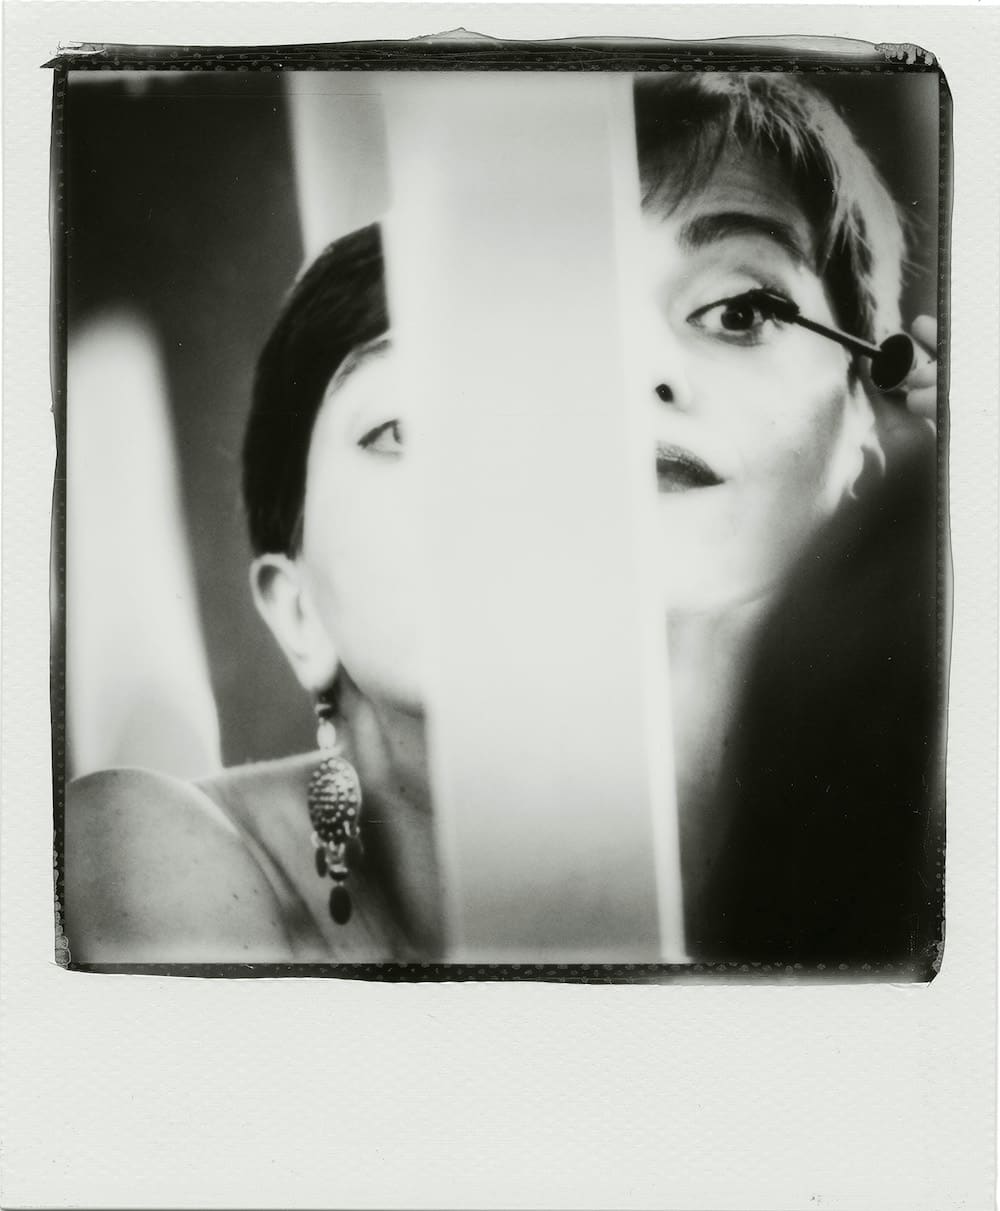 Polaroid experiments with Luigi Ulisse Iovane